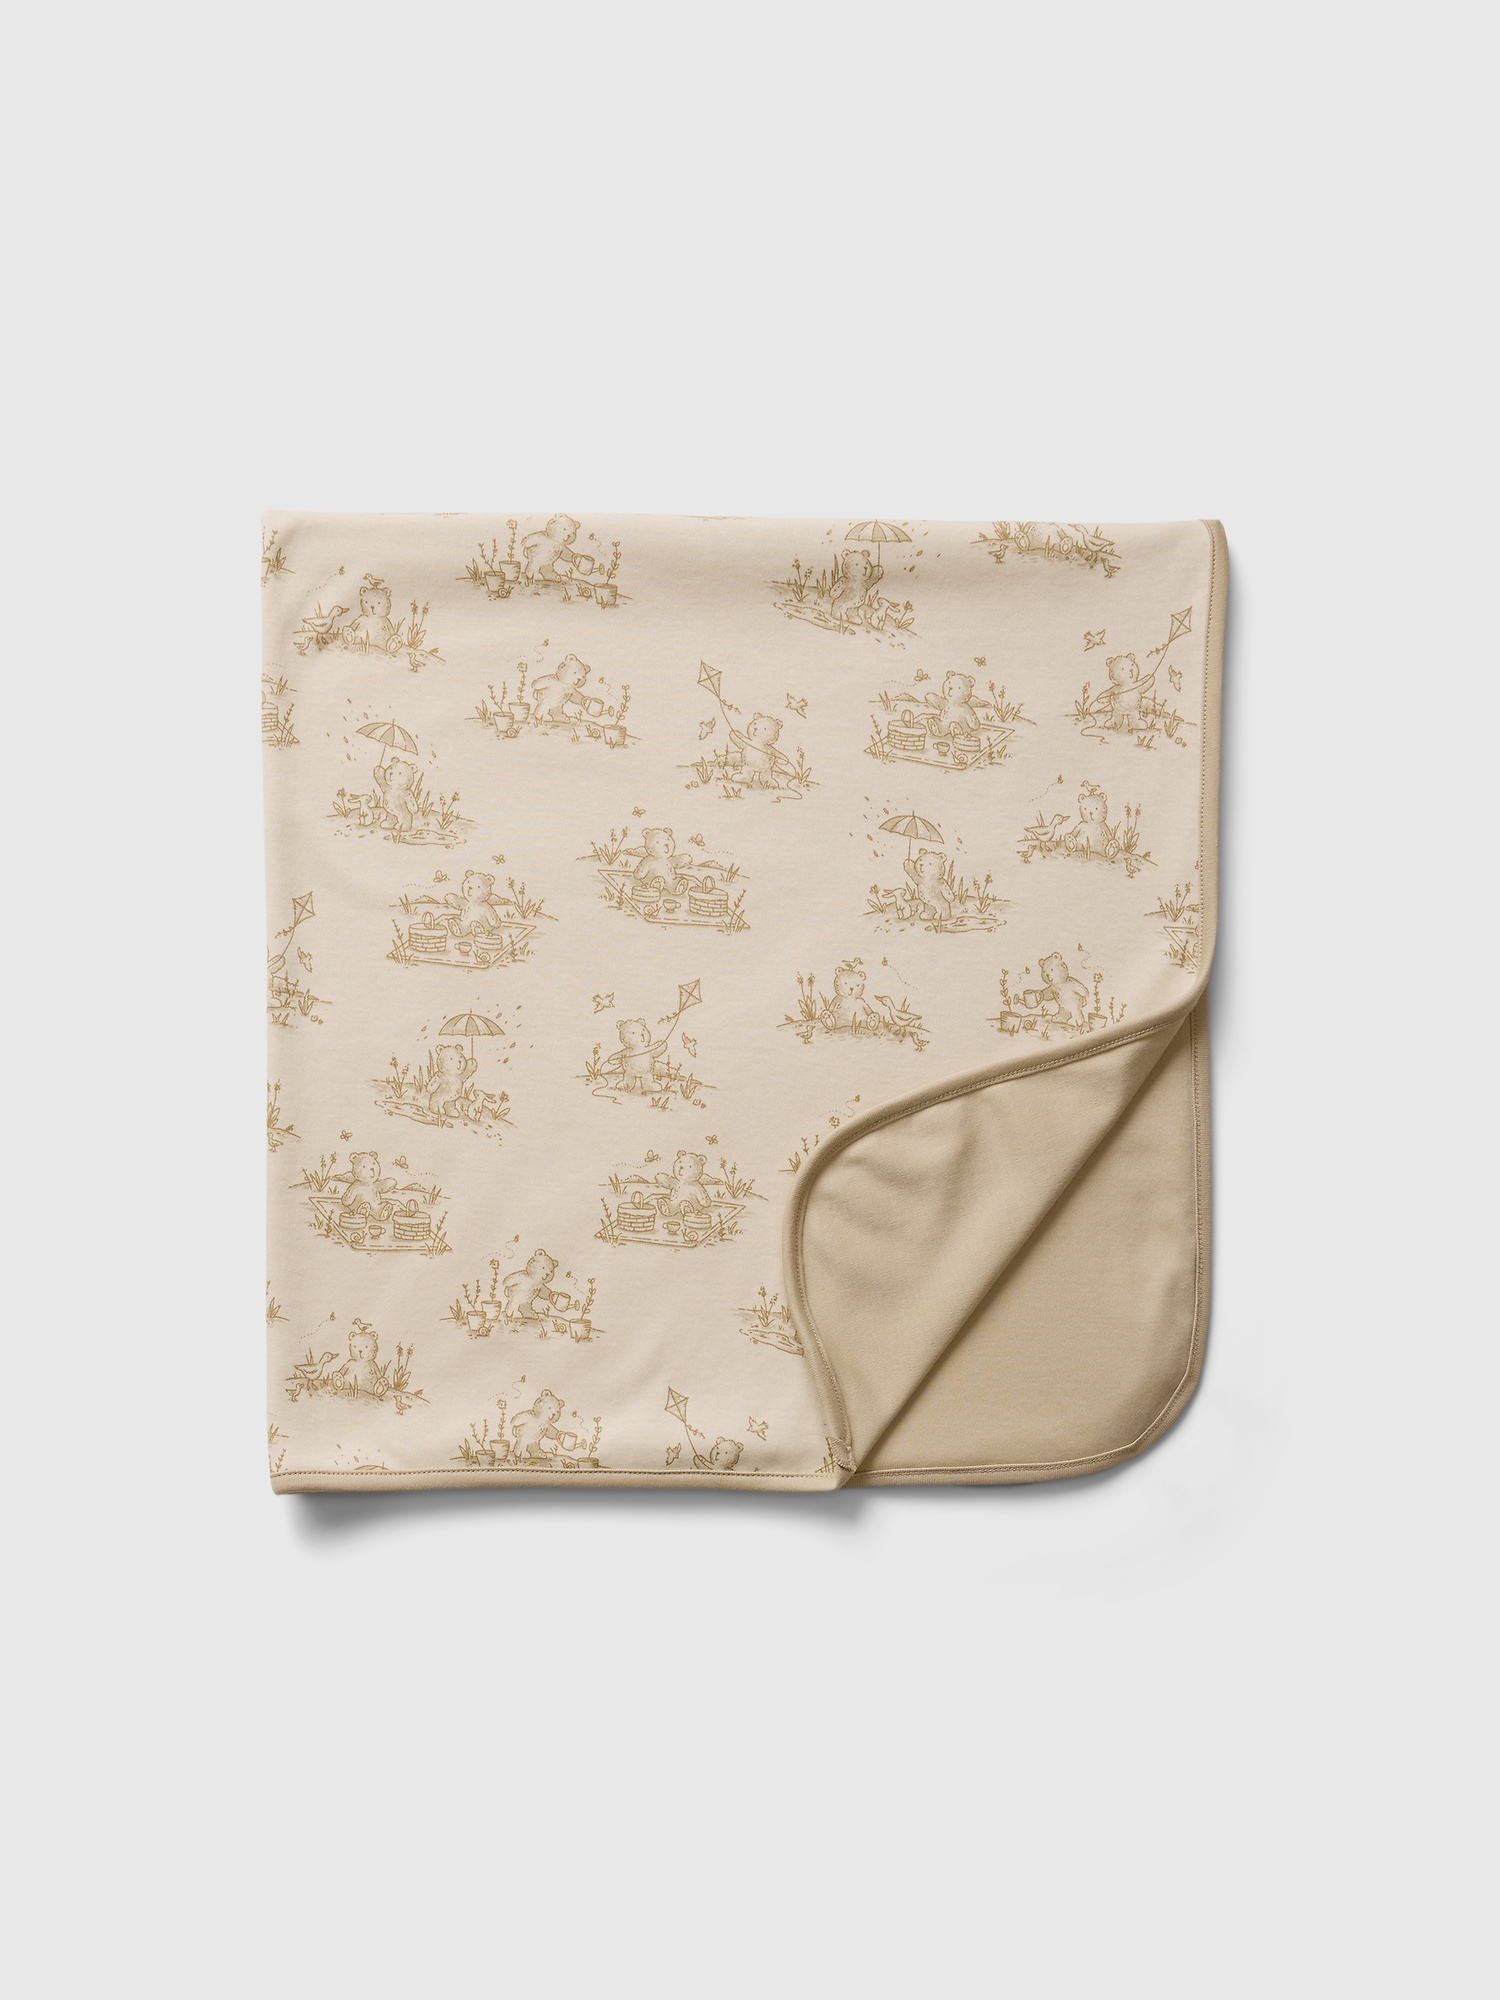 Baby First Favorites Supima Print Blanket